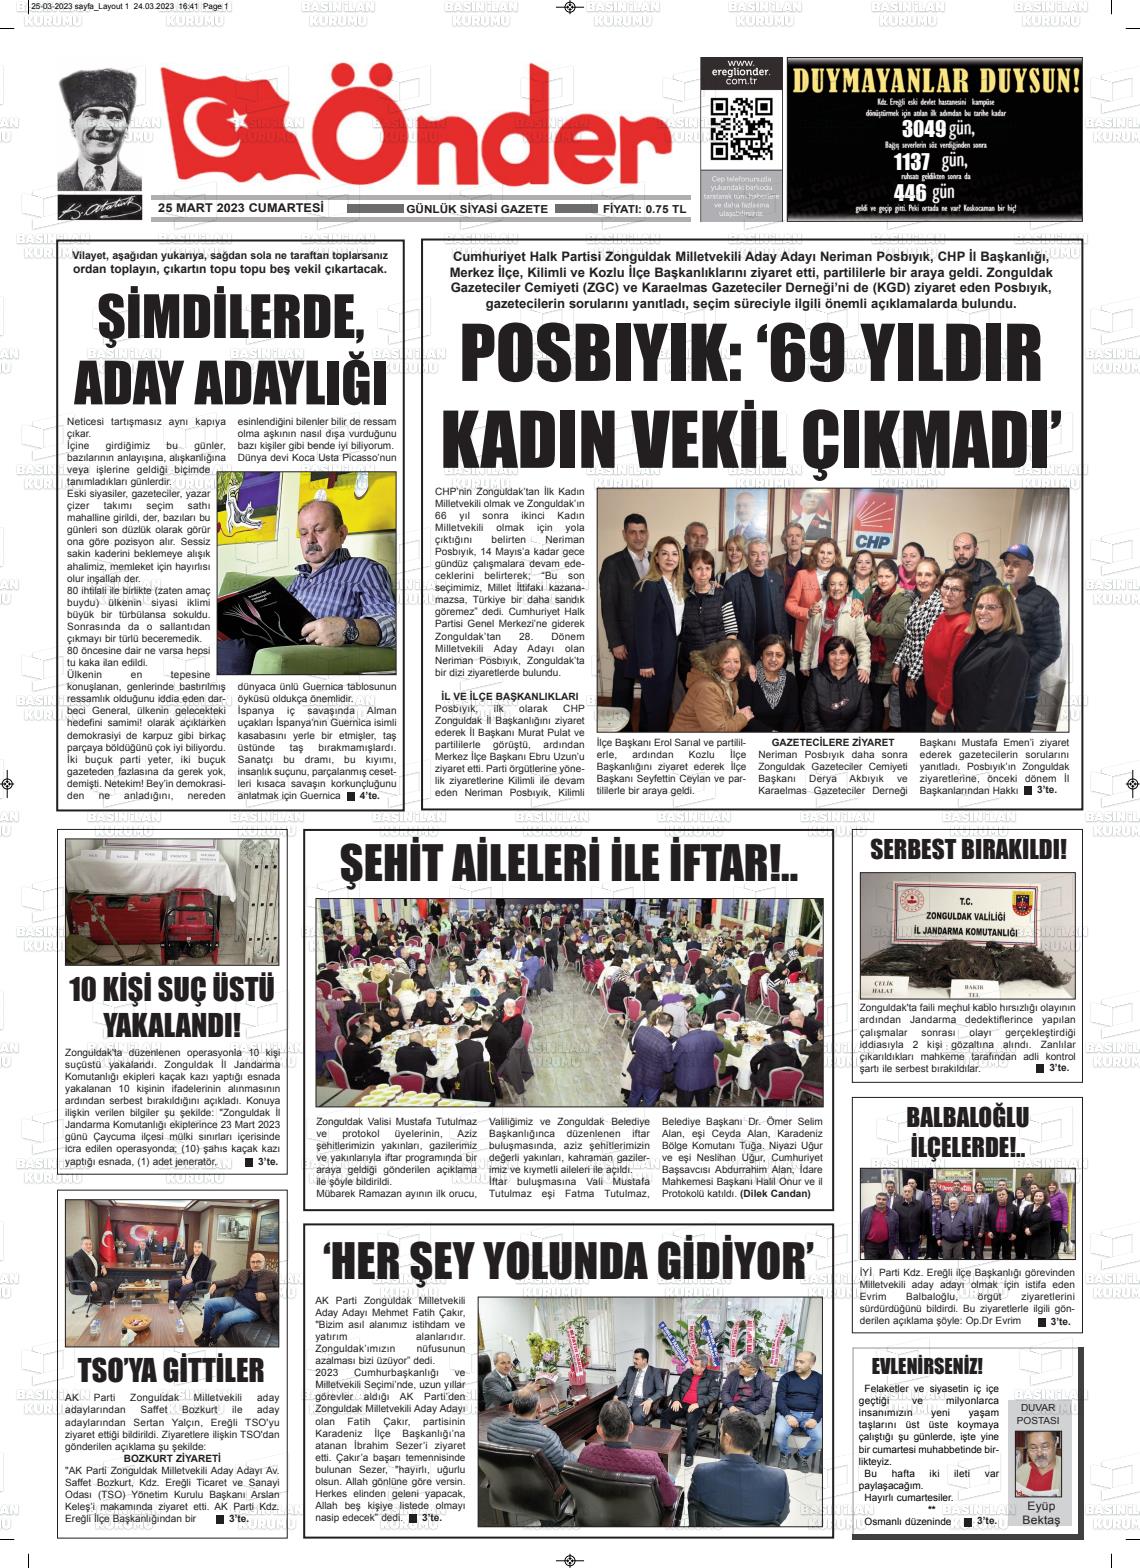 25 Mart 2023 Zonguldak Önder Gazete Manşeti